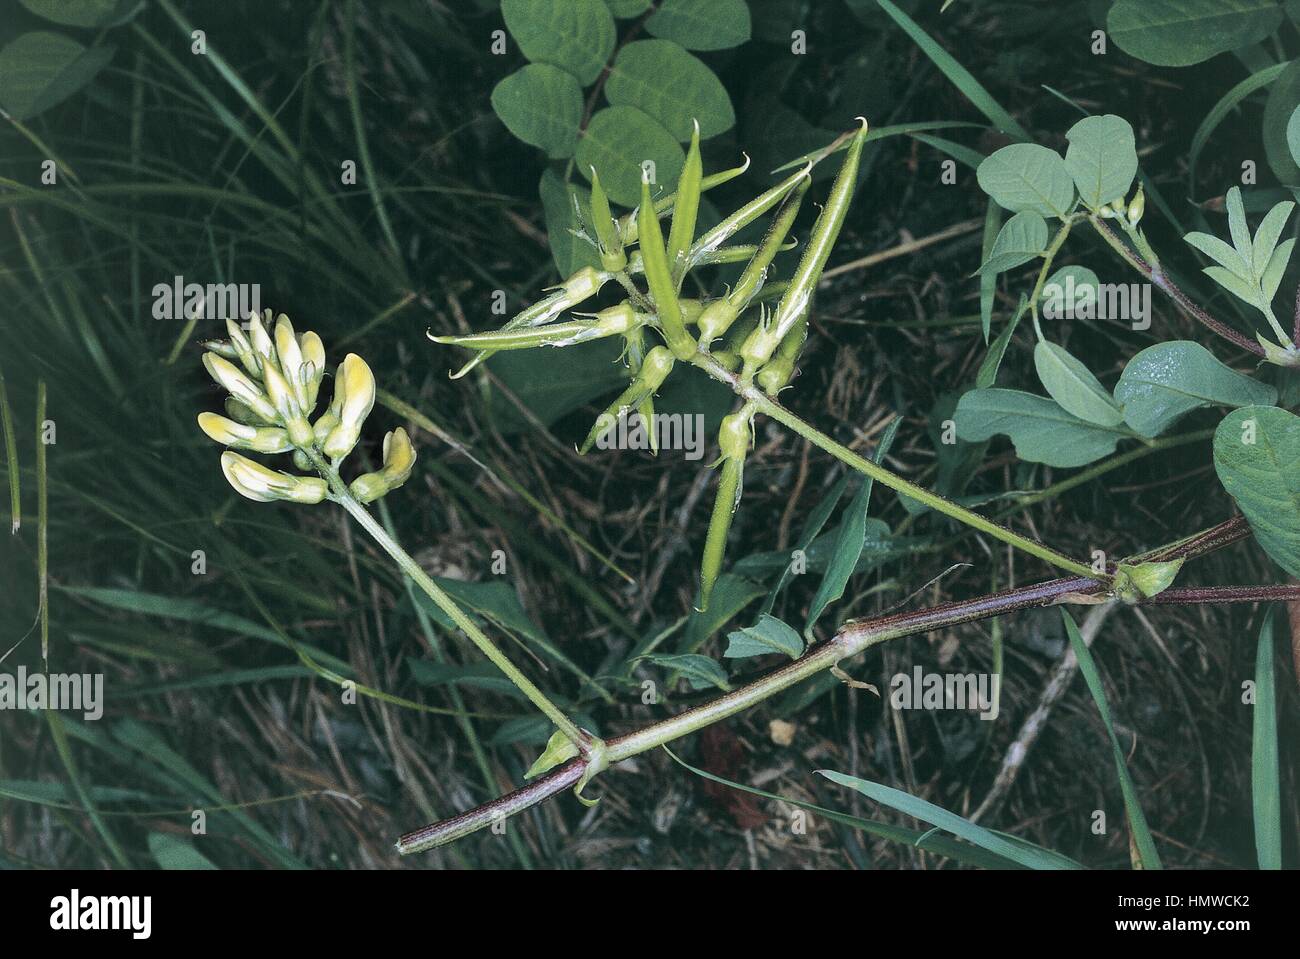 Botany - Fabaceae (or Papilionaceae) - Licorice milkvetch or Wild licorice (Astragalus glycyphyllos). Stock Photo